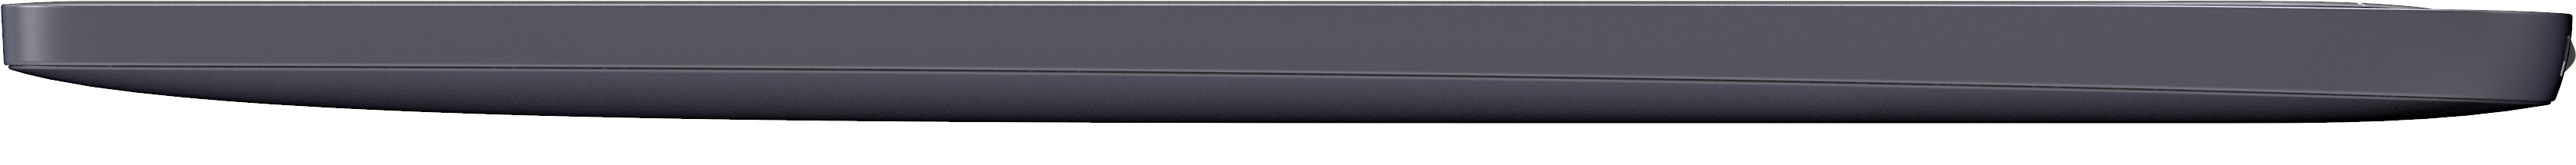 Touch HD 3 - metallic grey